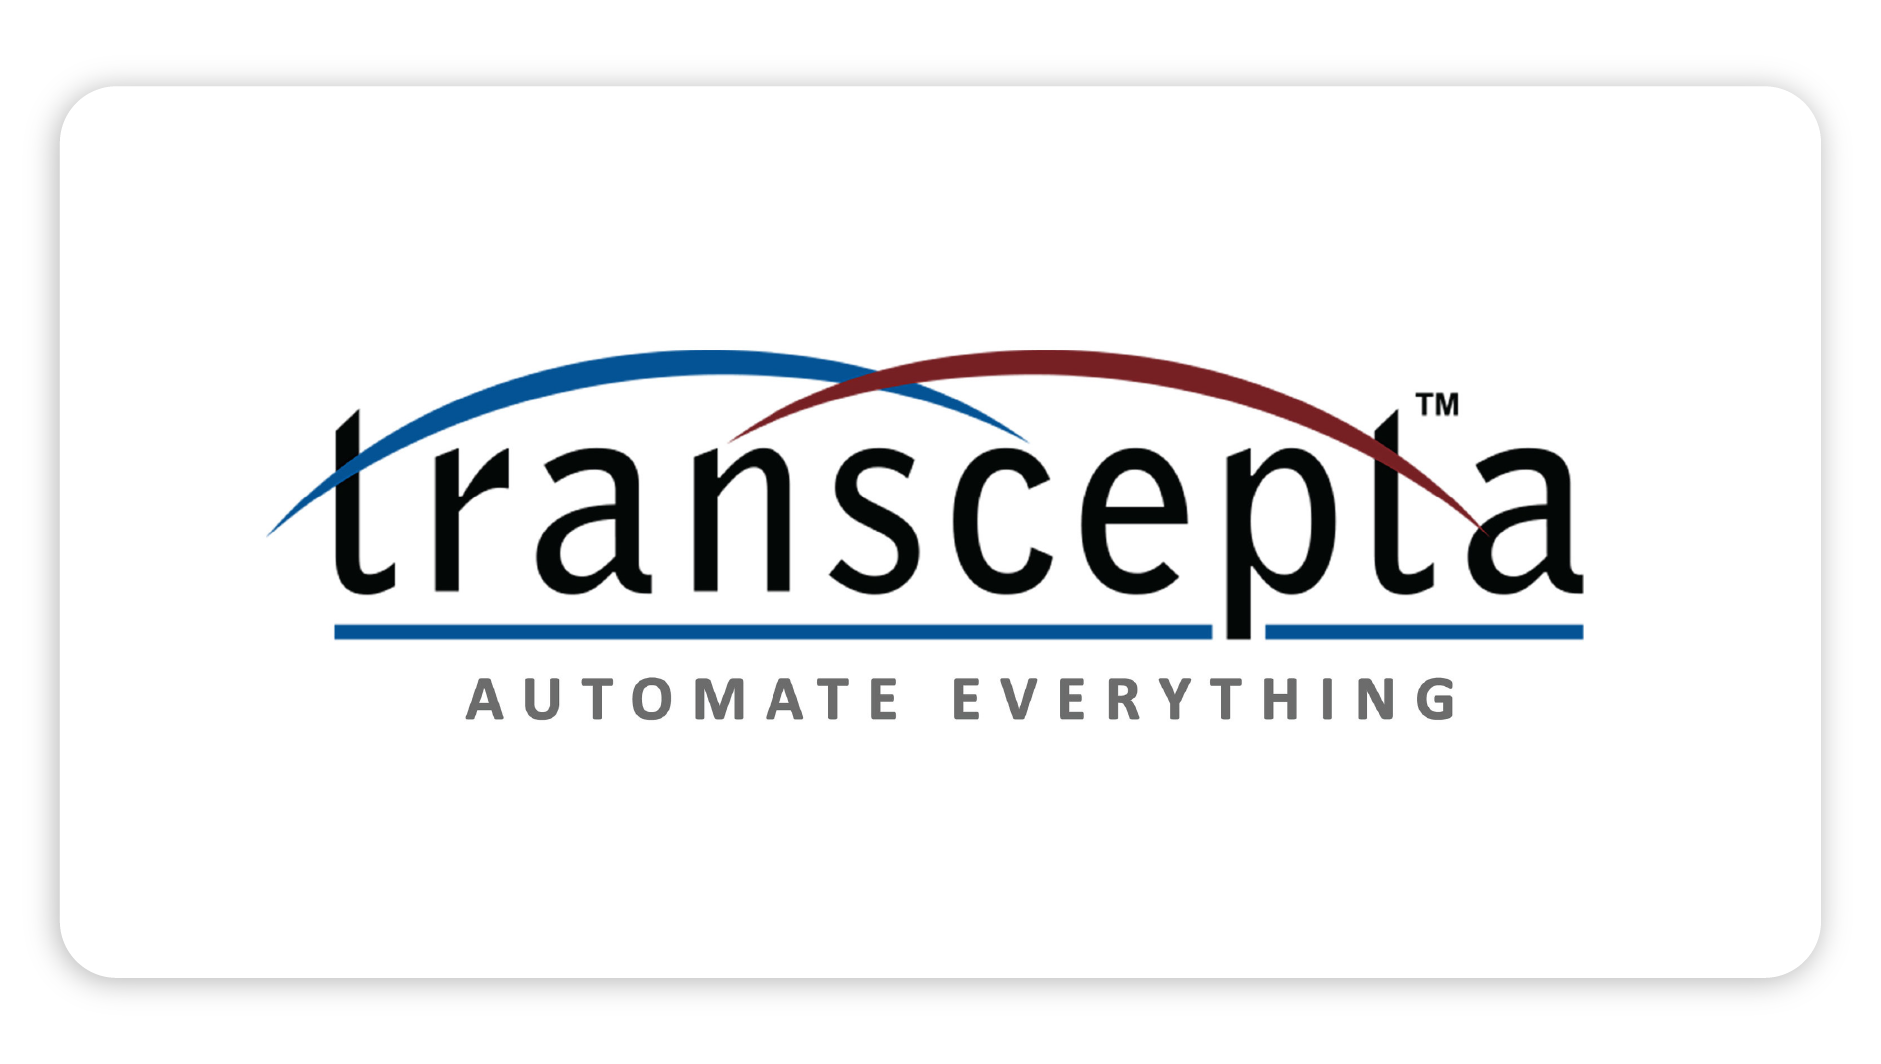 Transcepta Website Uptime Performance Monitoring Case Study